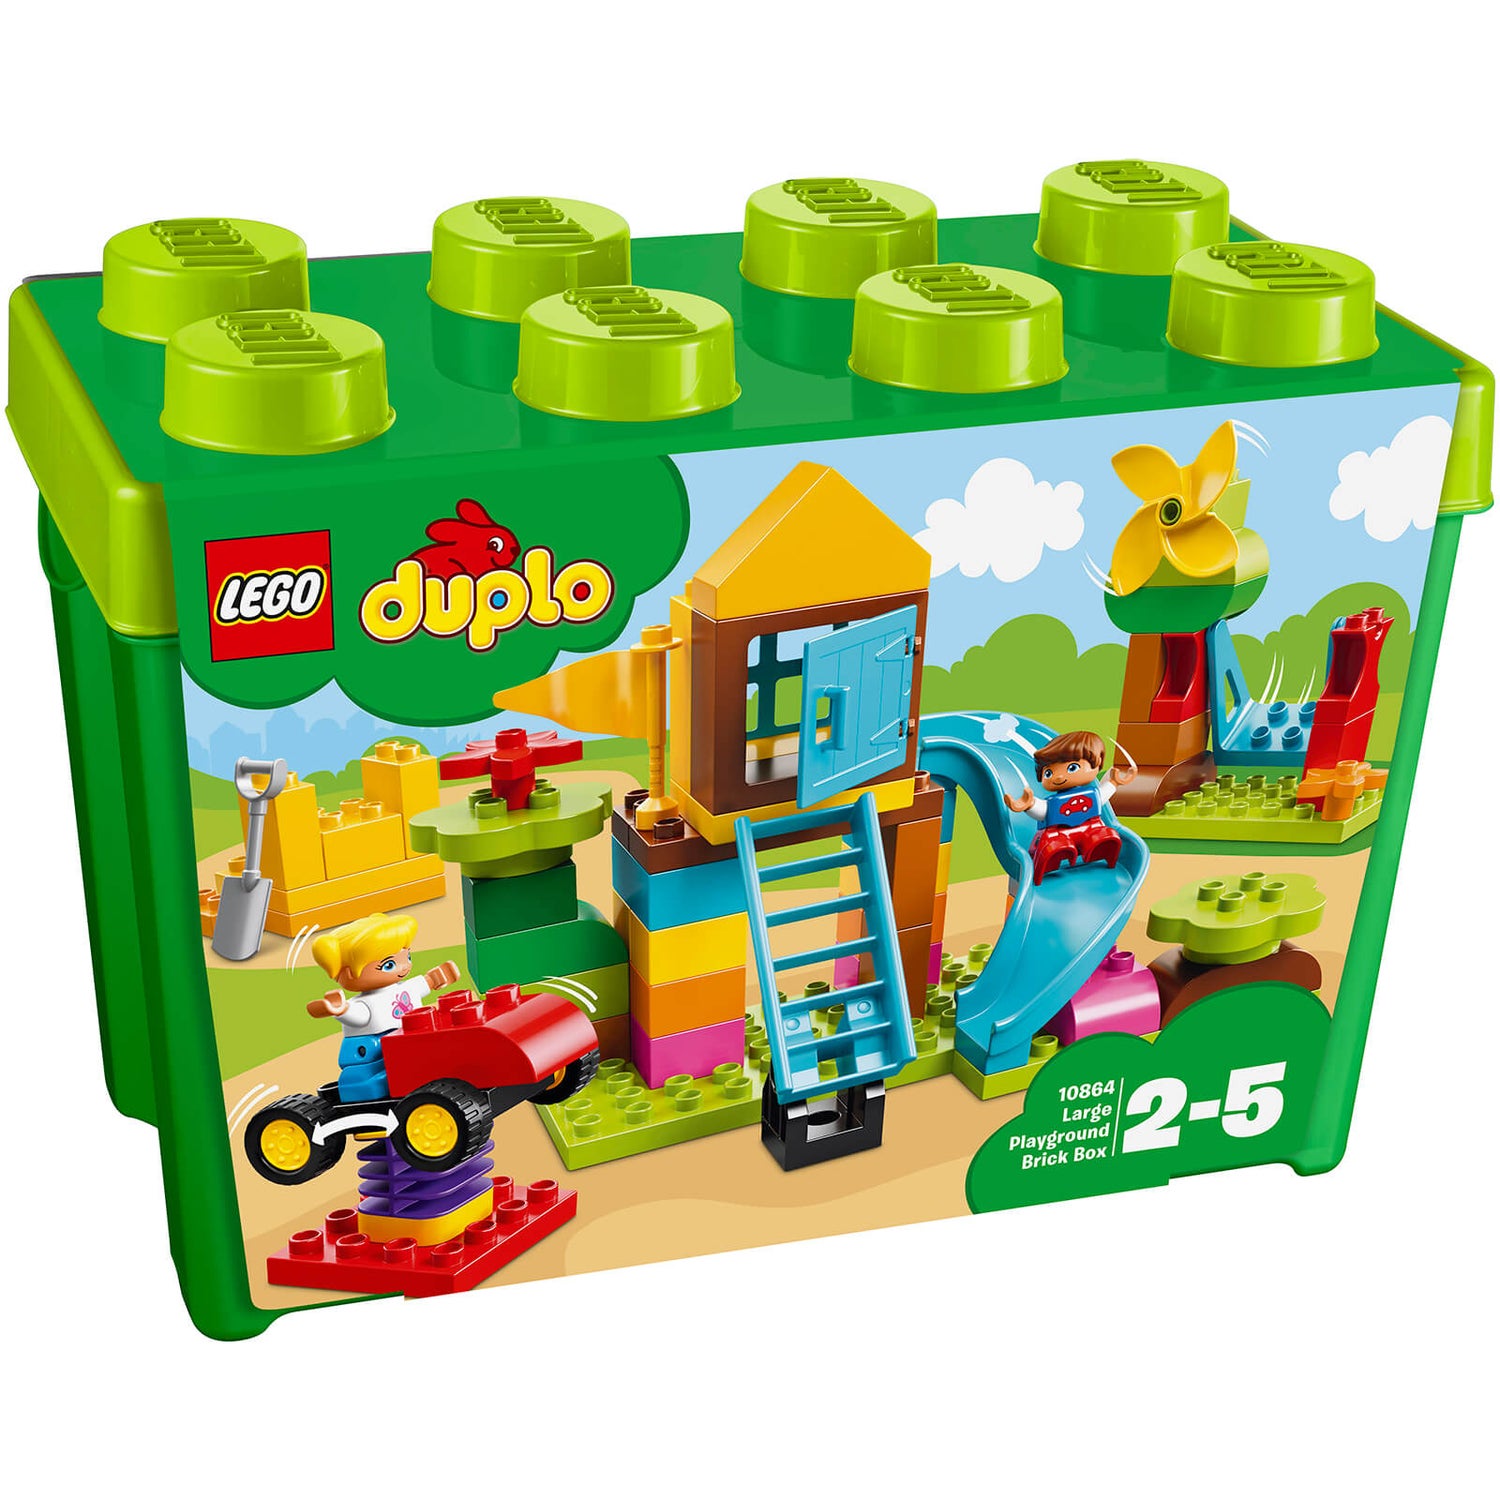 Badkamer Specifiek Huh LEGO DUPLO: Large Playground Brick Box (10864) Toys - Zavvi US